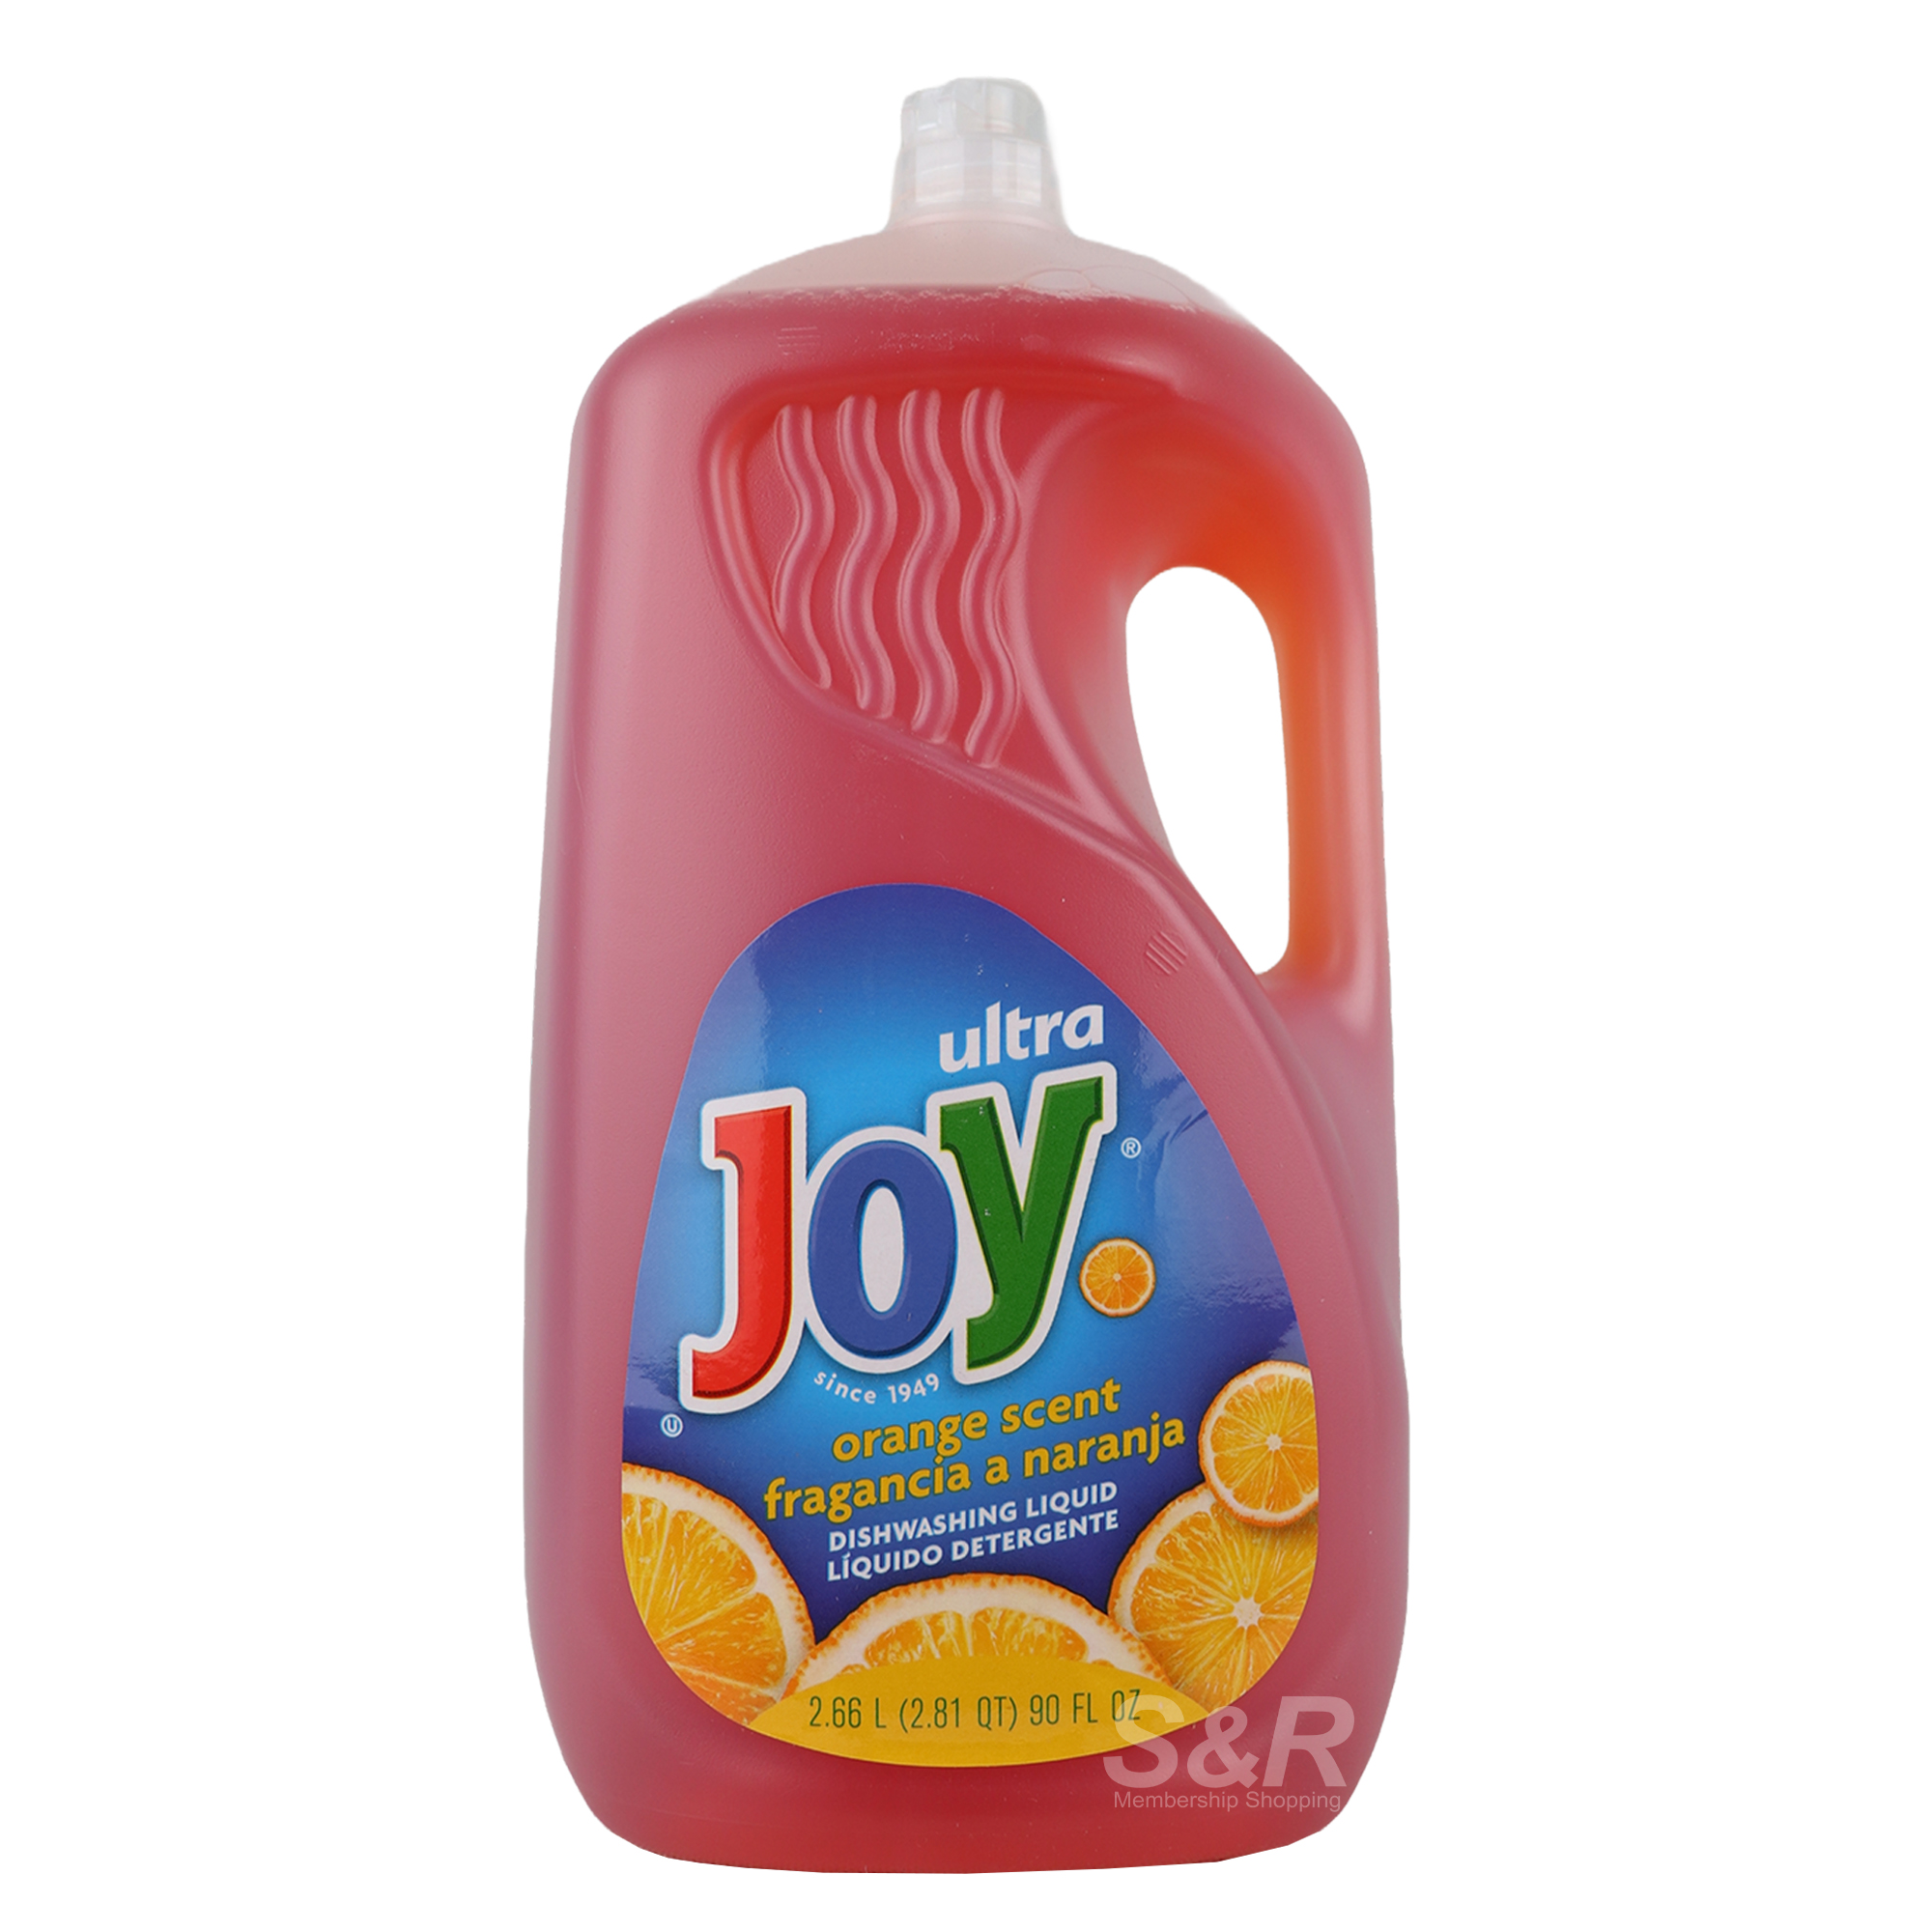 Joy Ultra Orange Scent Dishwashing Liquid 2.66L